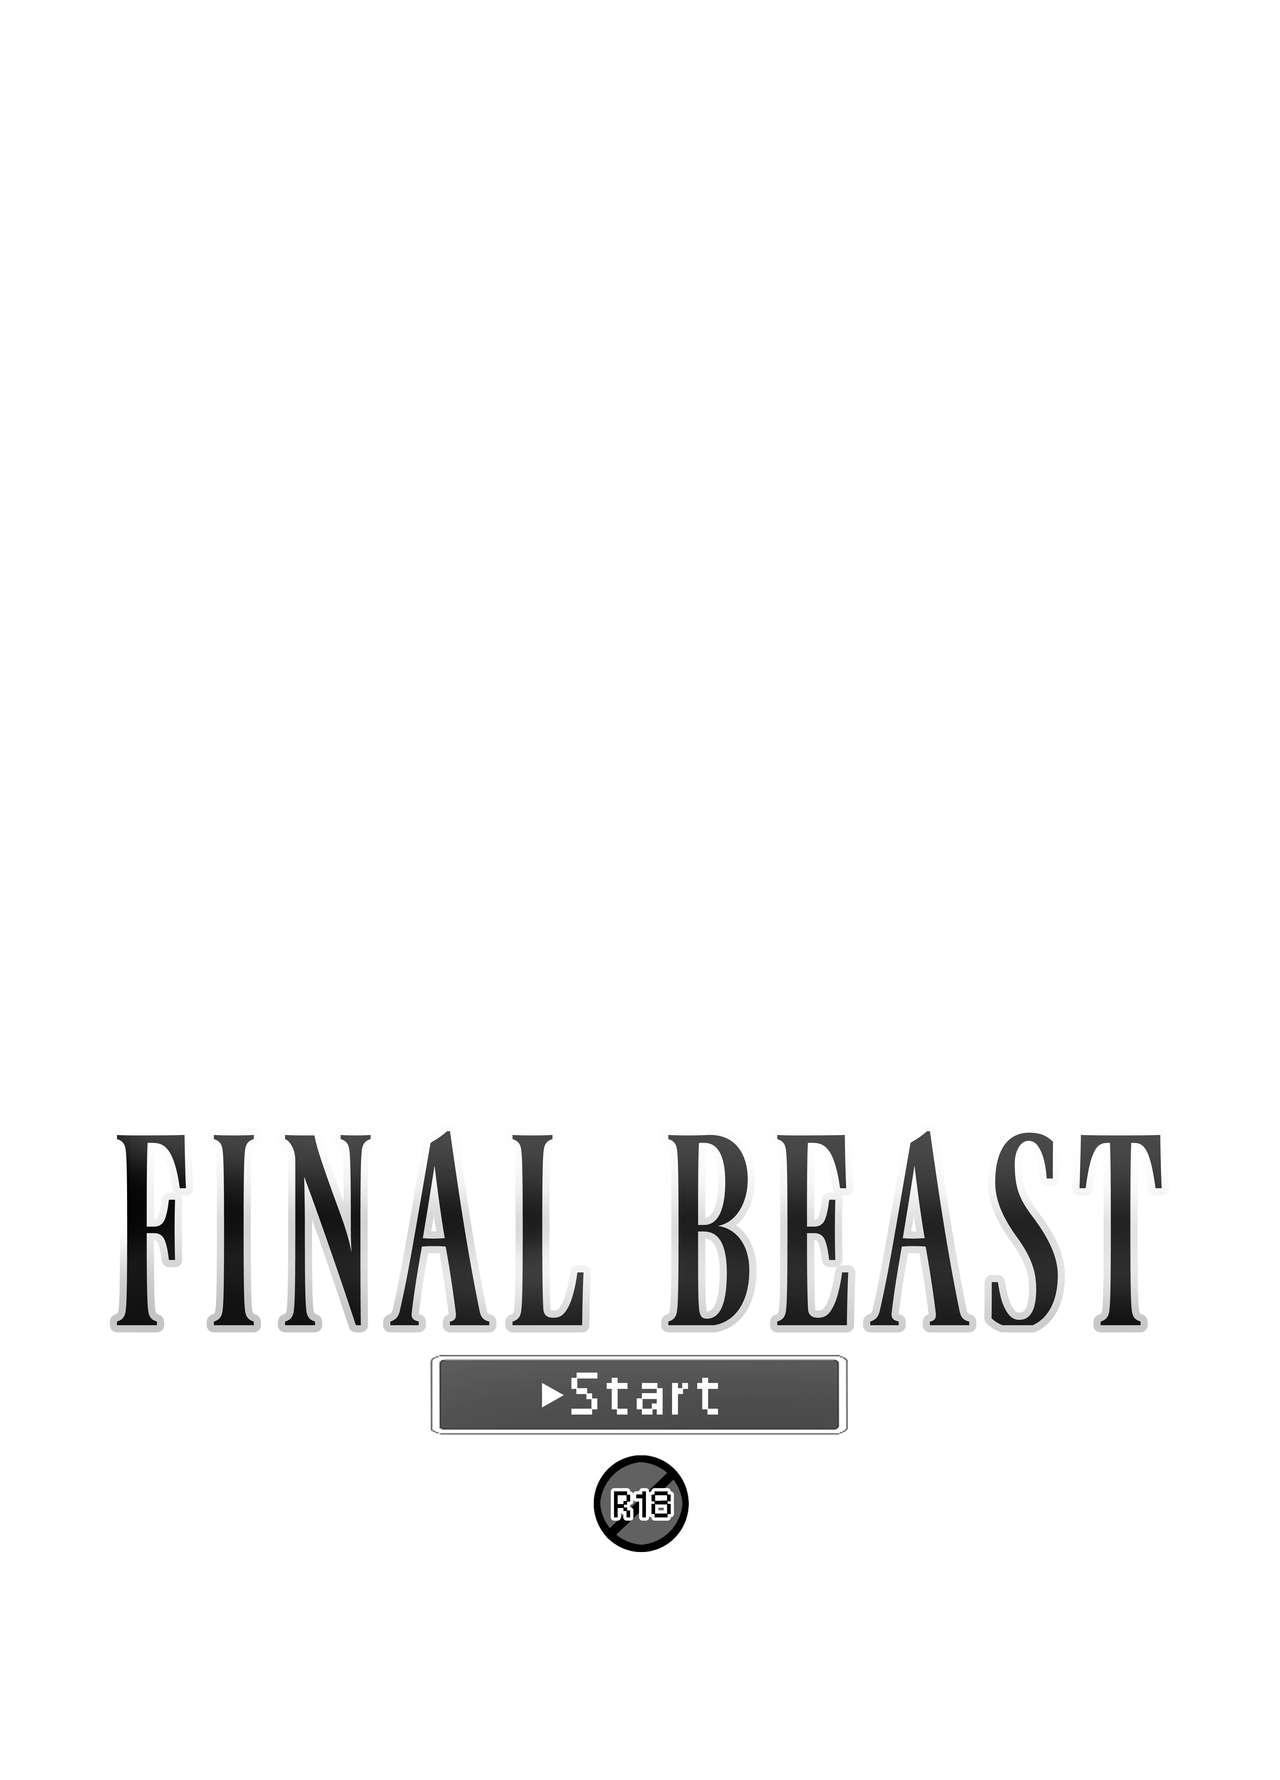 Celeb FINAL BEAST - Final fantasy vii Final fantasy Domination - Page 3